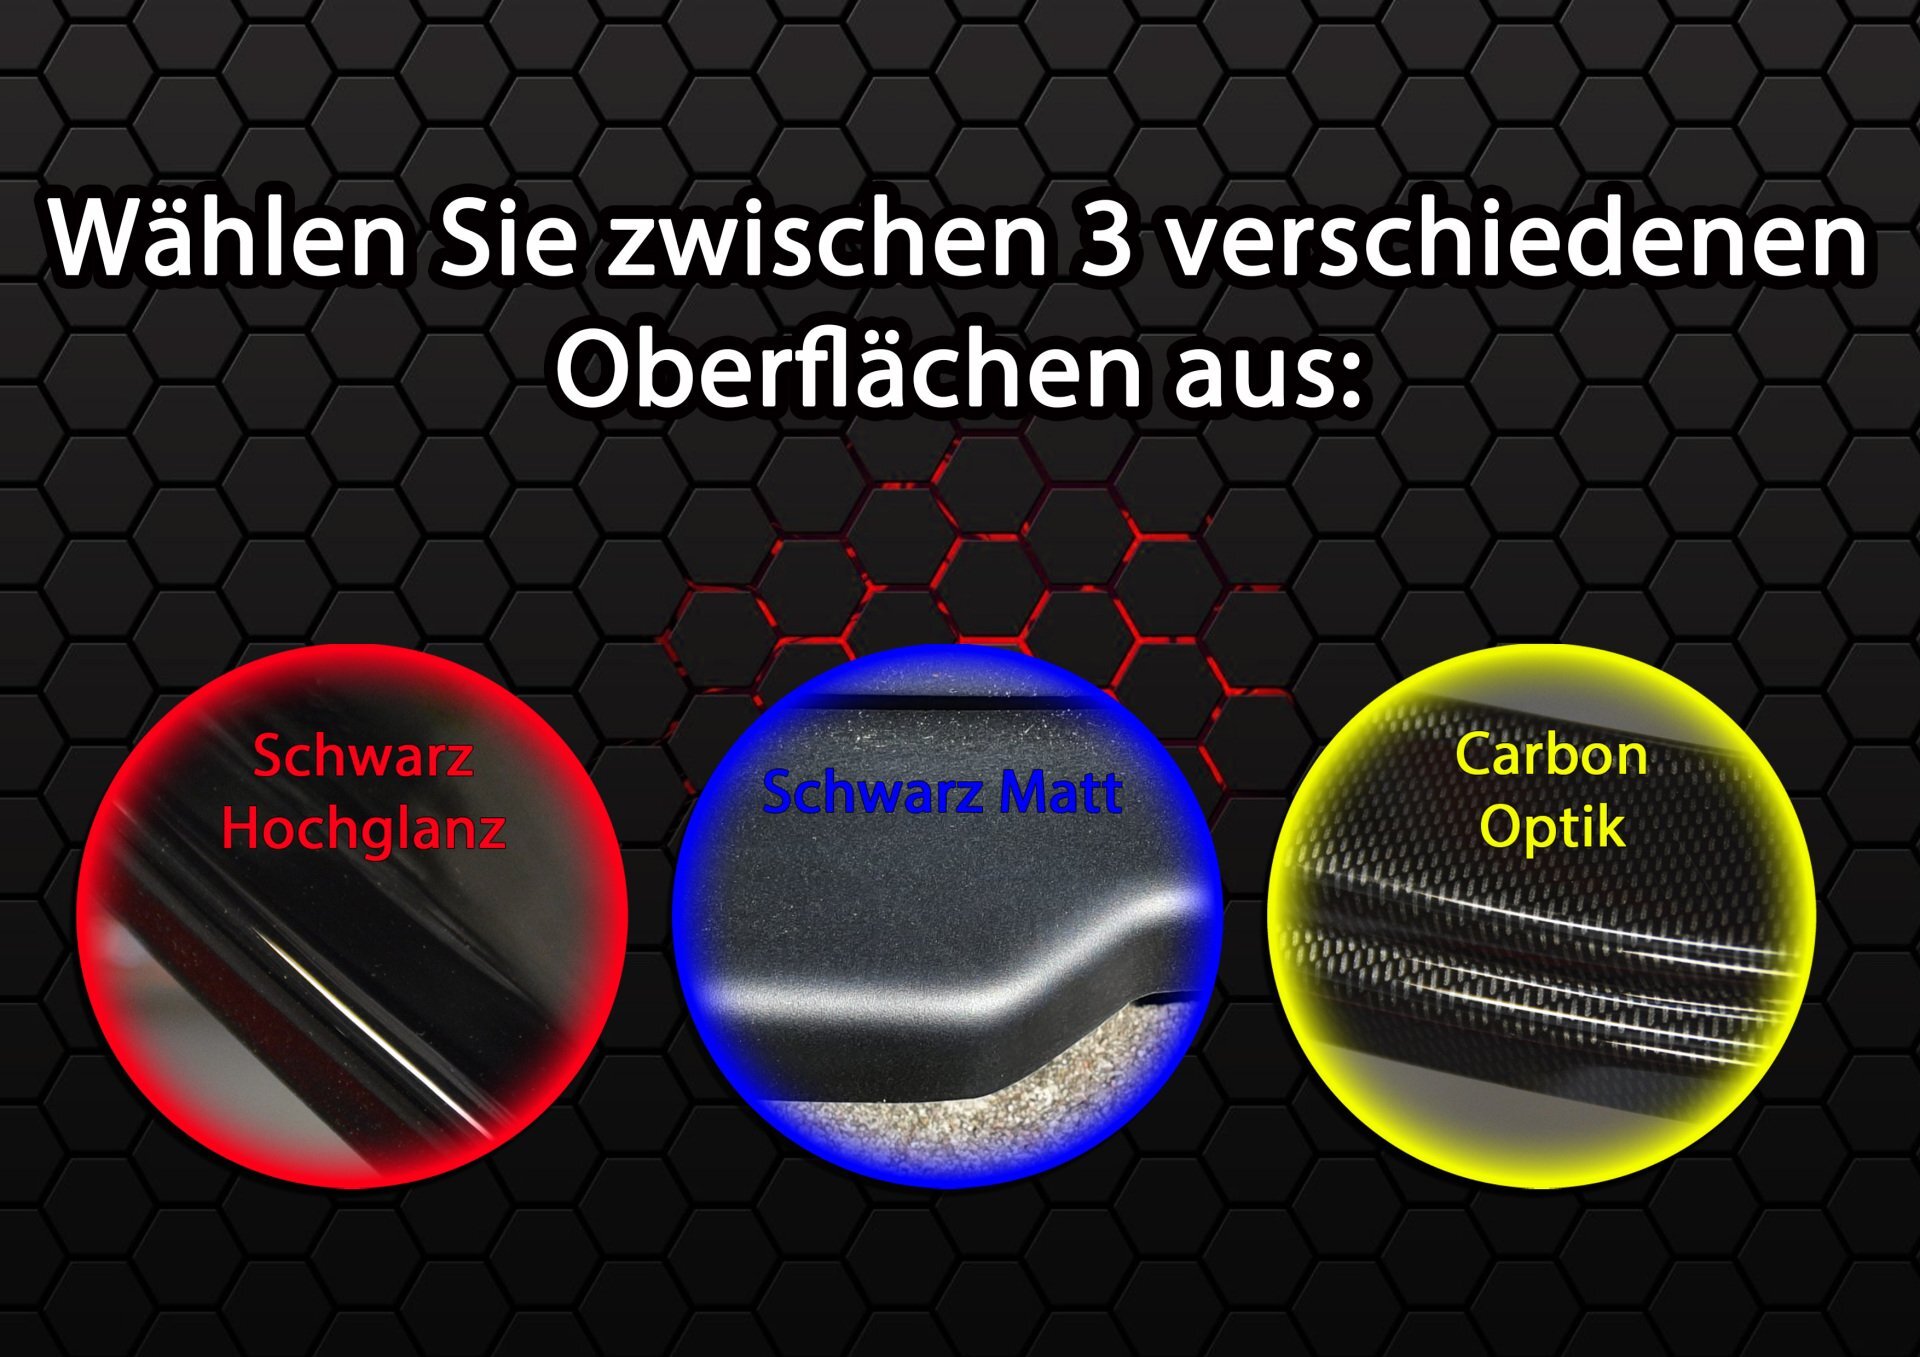 Spoilerschwert Frontspoiler aus ABS für VW Golf 3 mit GTi Spoiler Carbon  Optik 